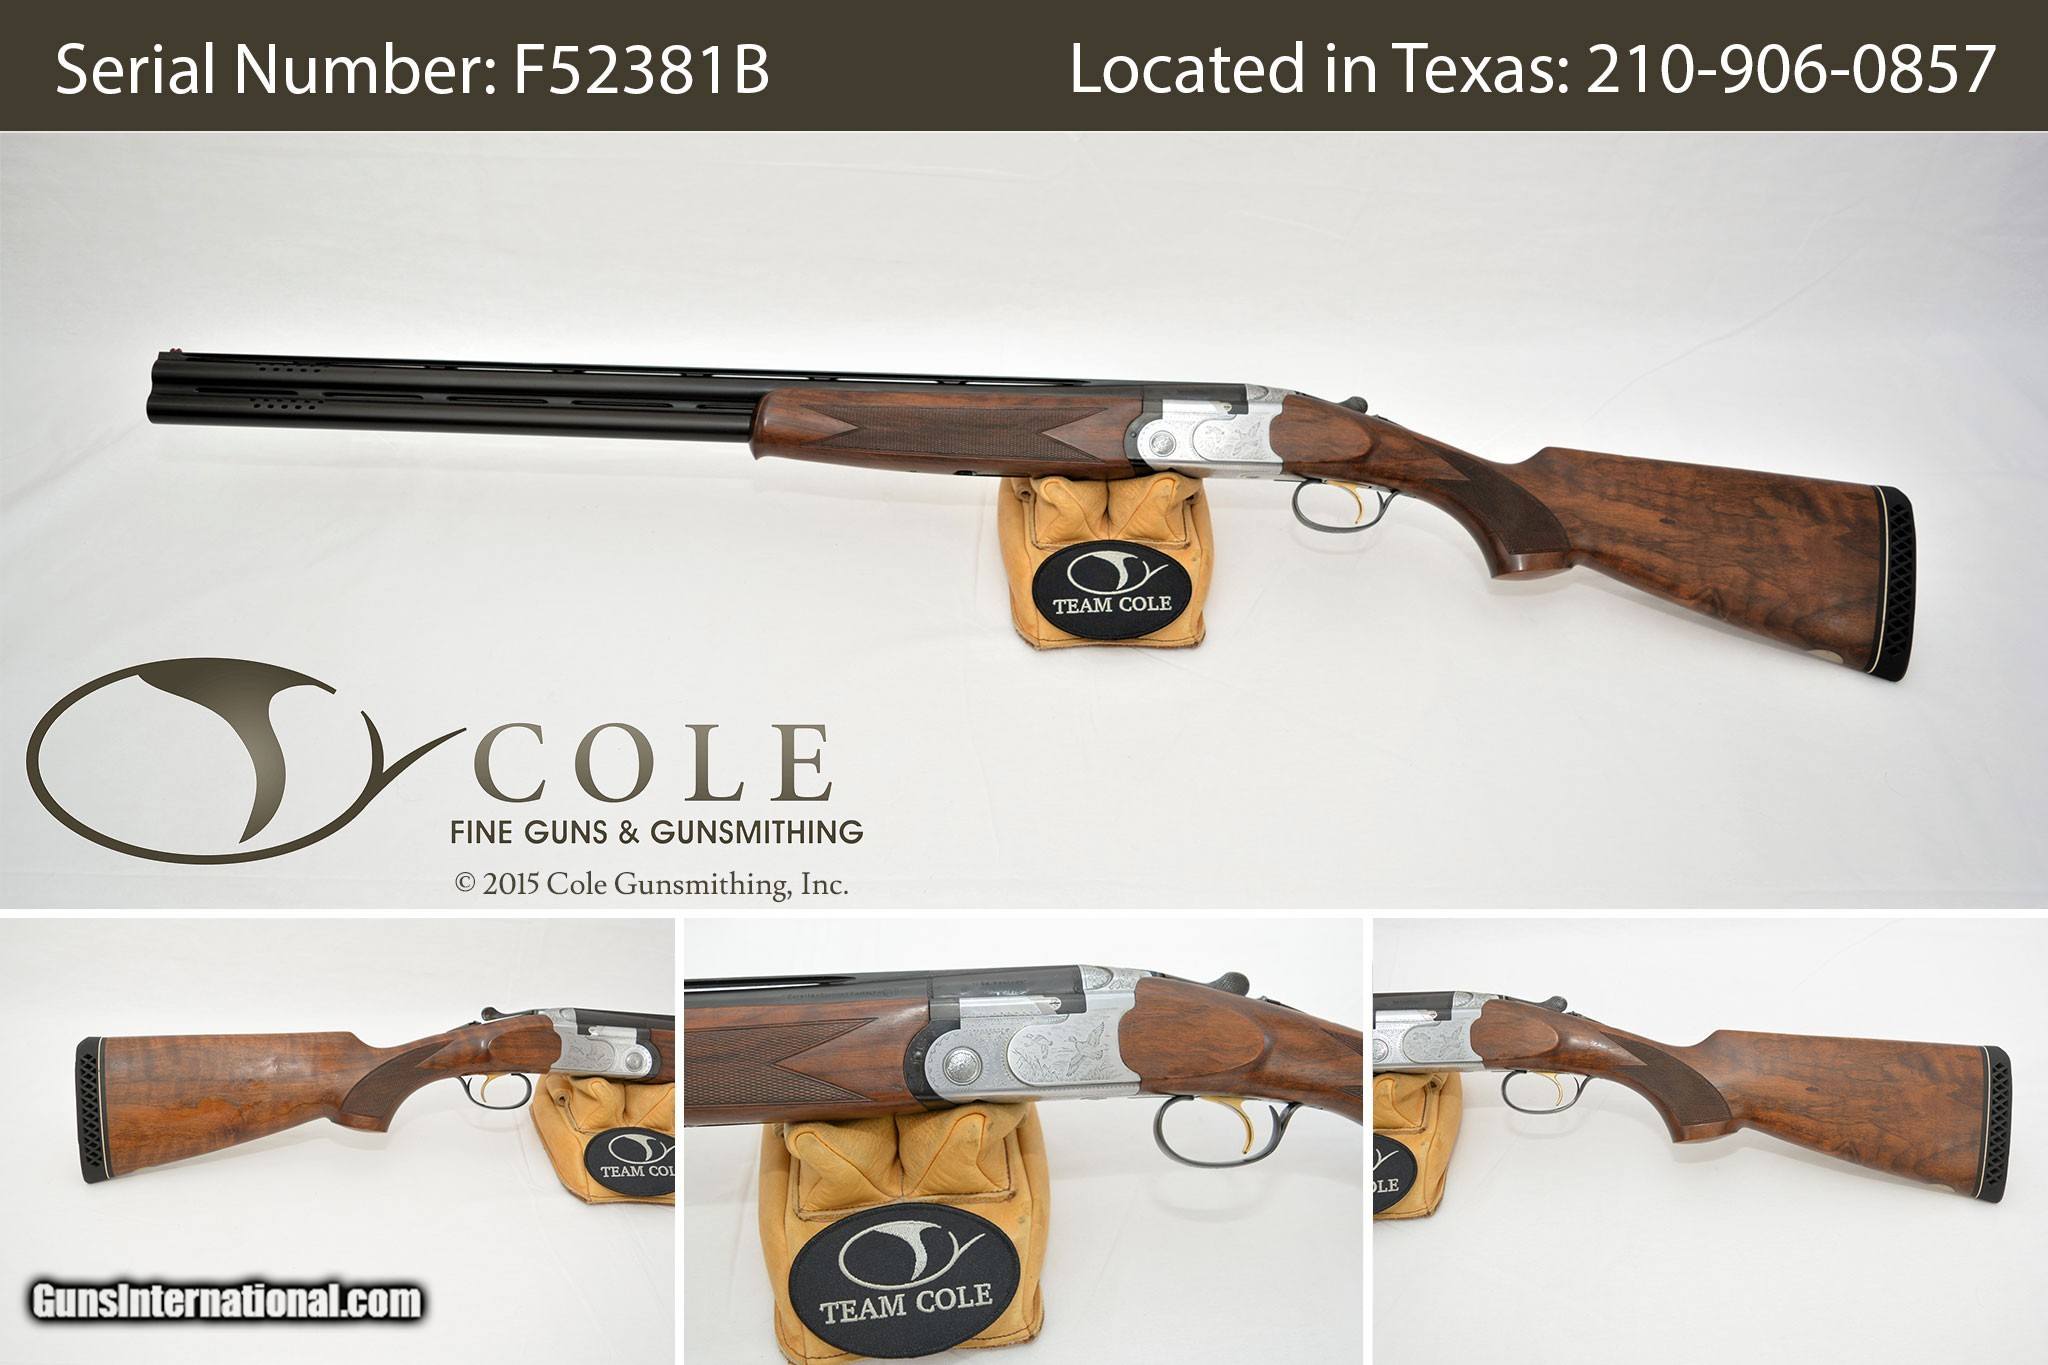 Custom and Fine European Shotguns - Cole Fine Guns & Gunsmithing